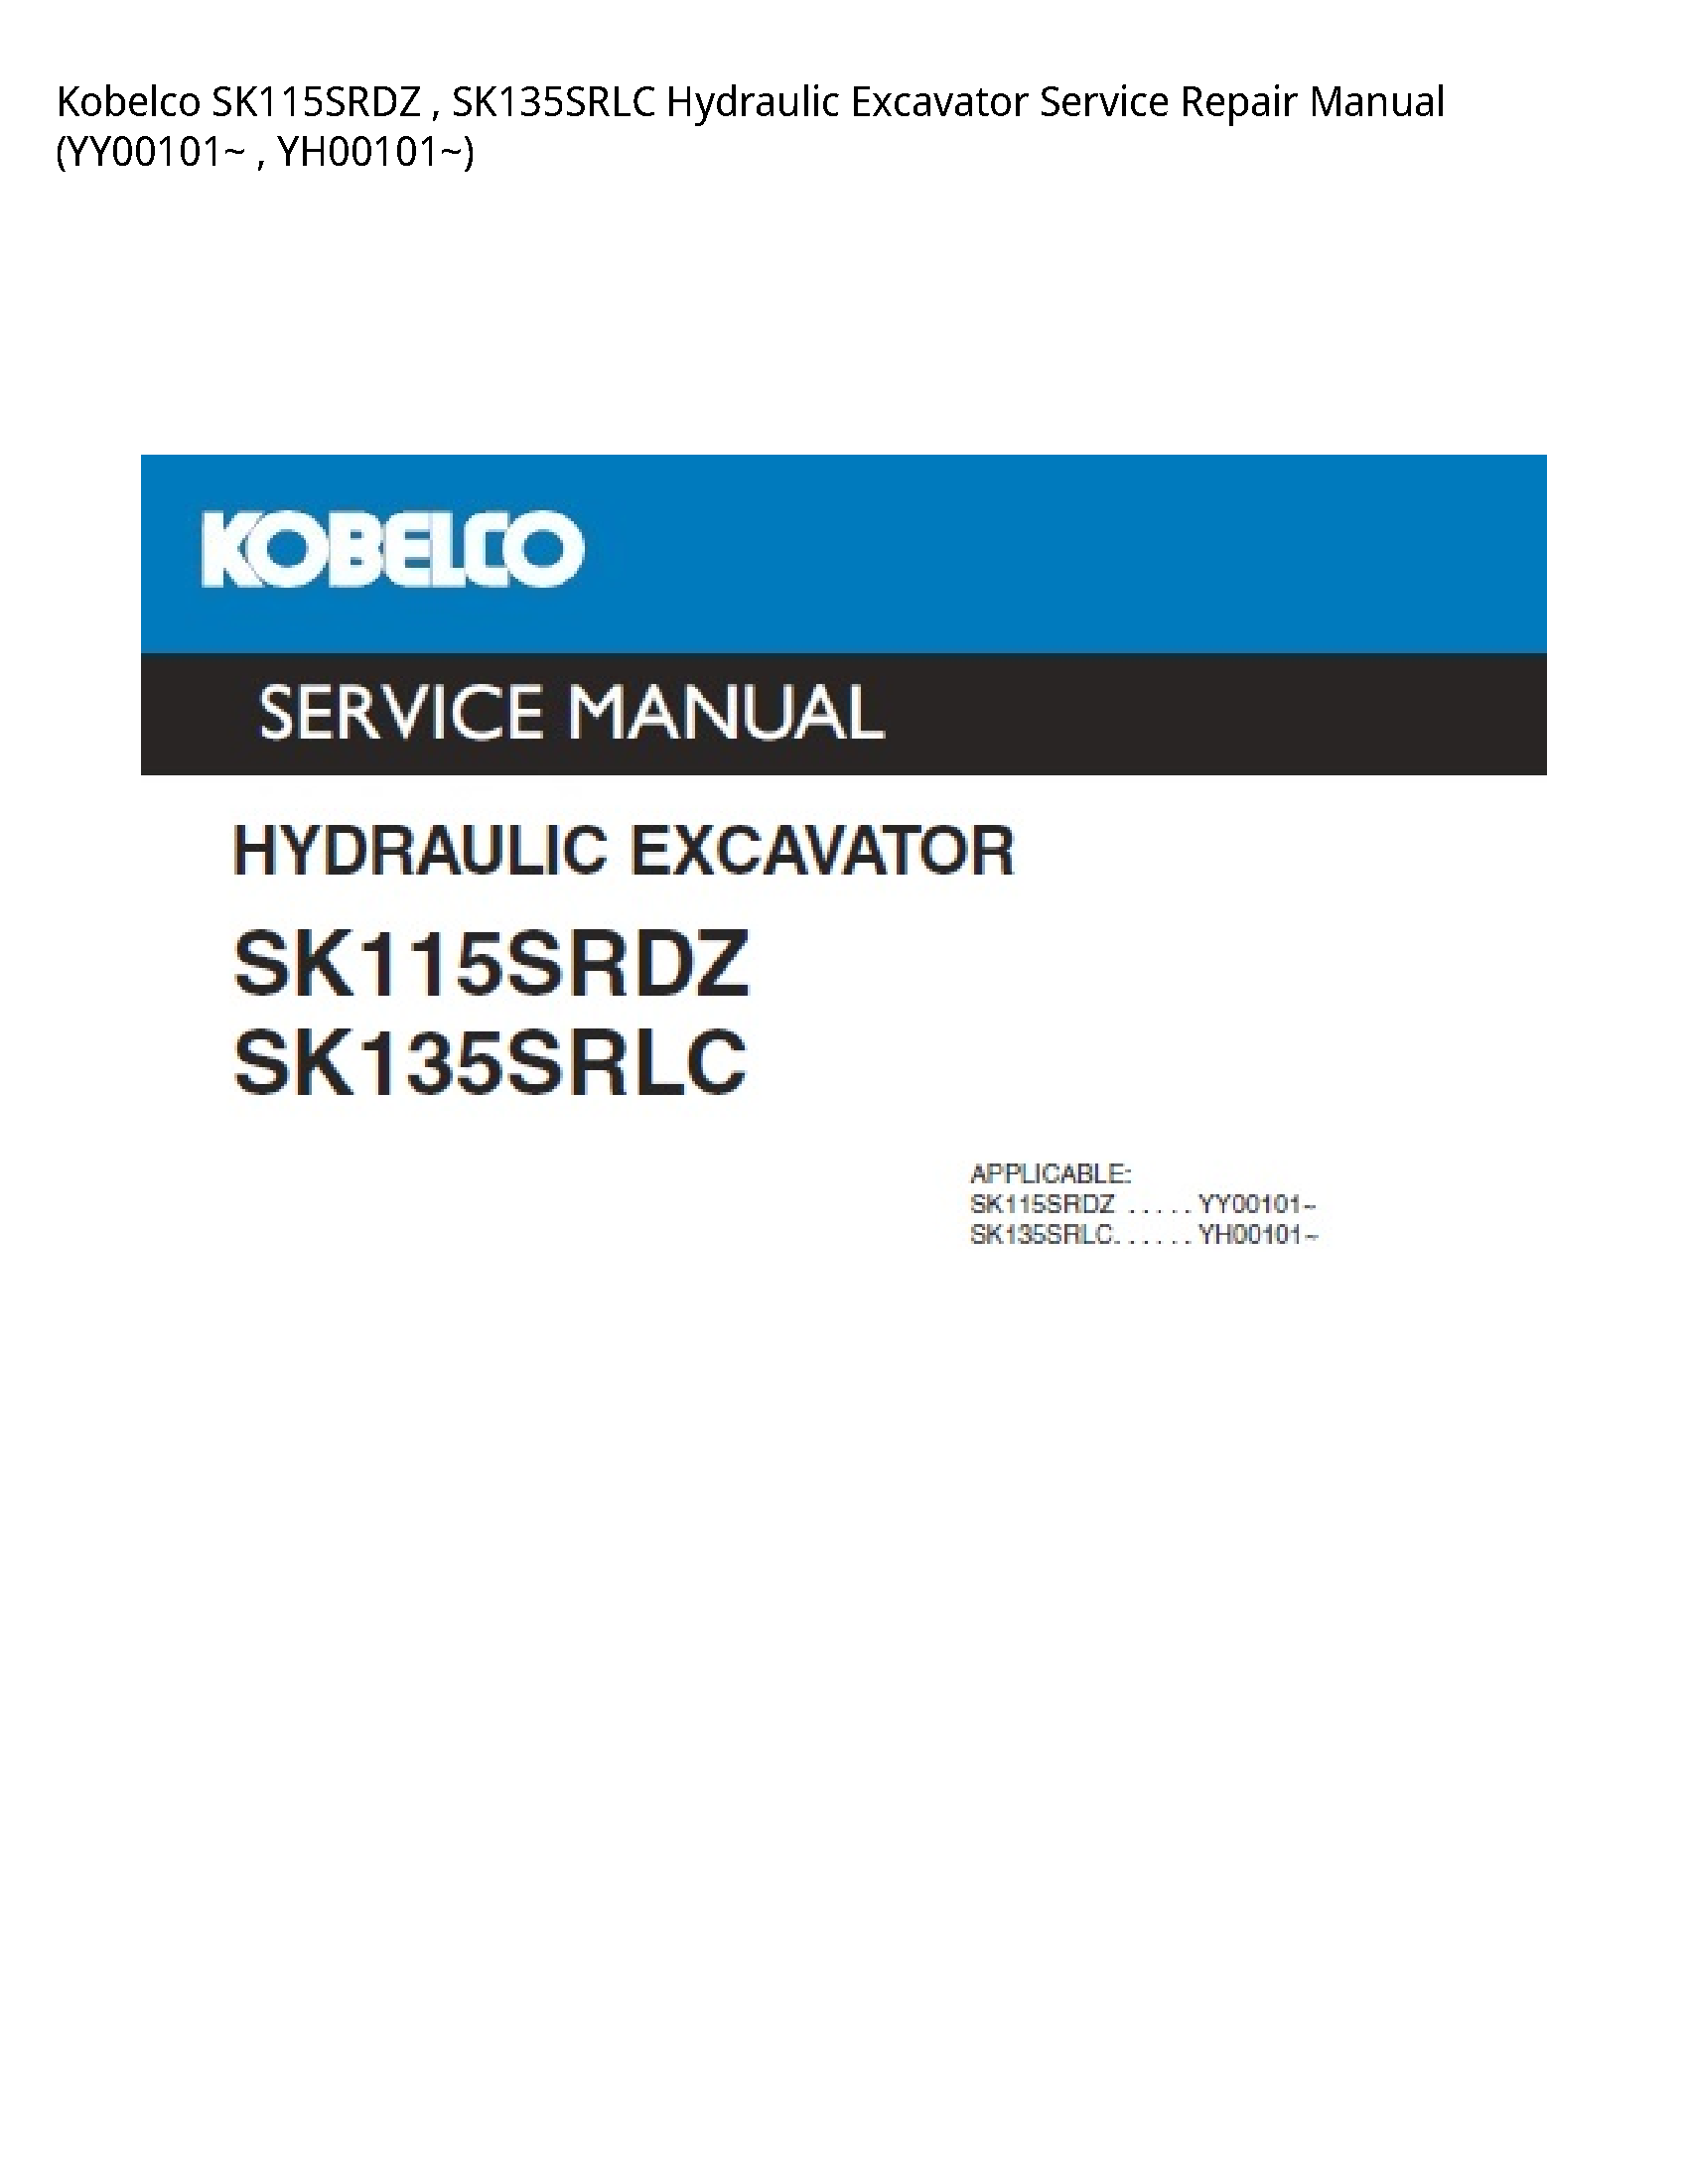 Kobelco SK115SRDZ Hydraulic Excavator manual